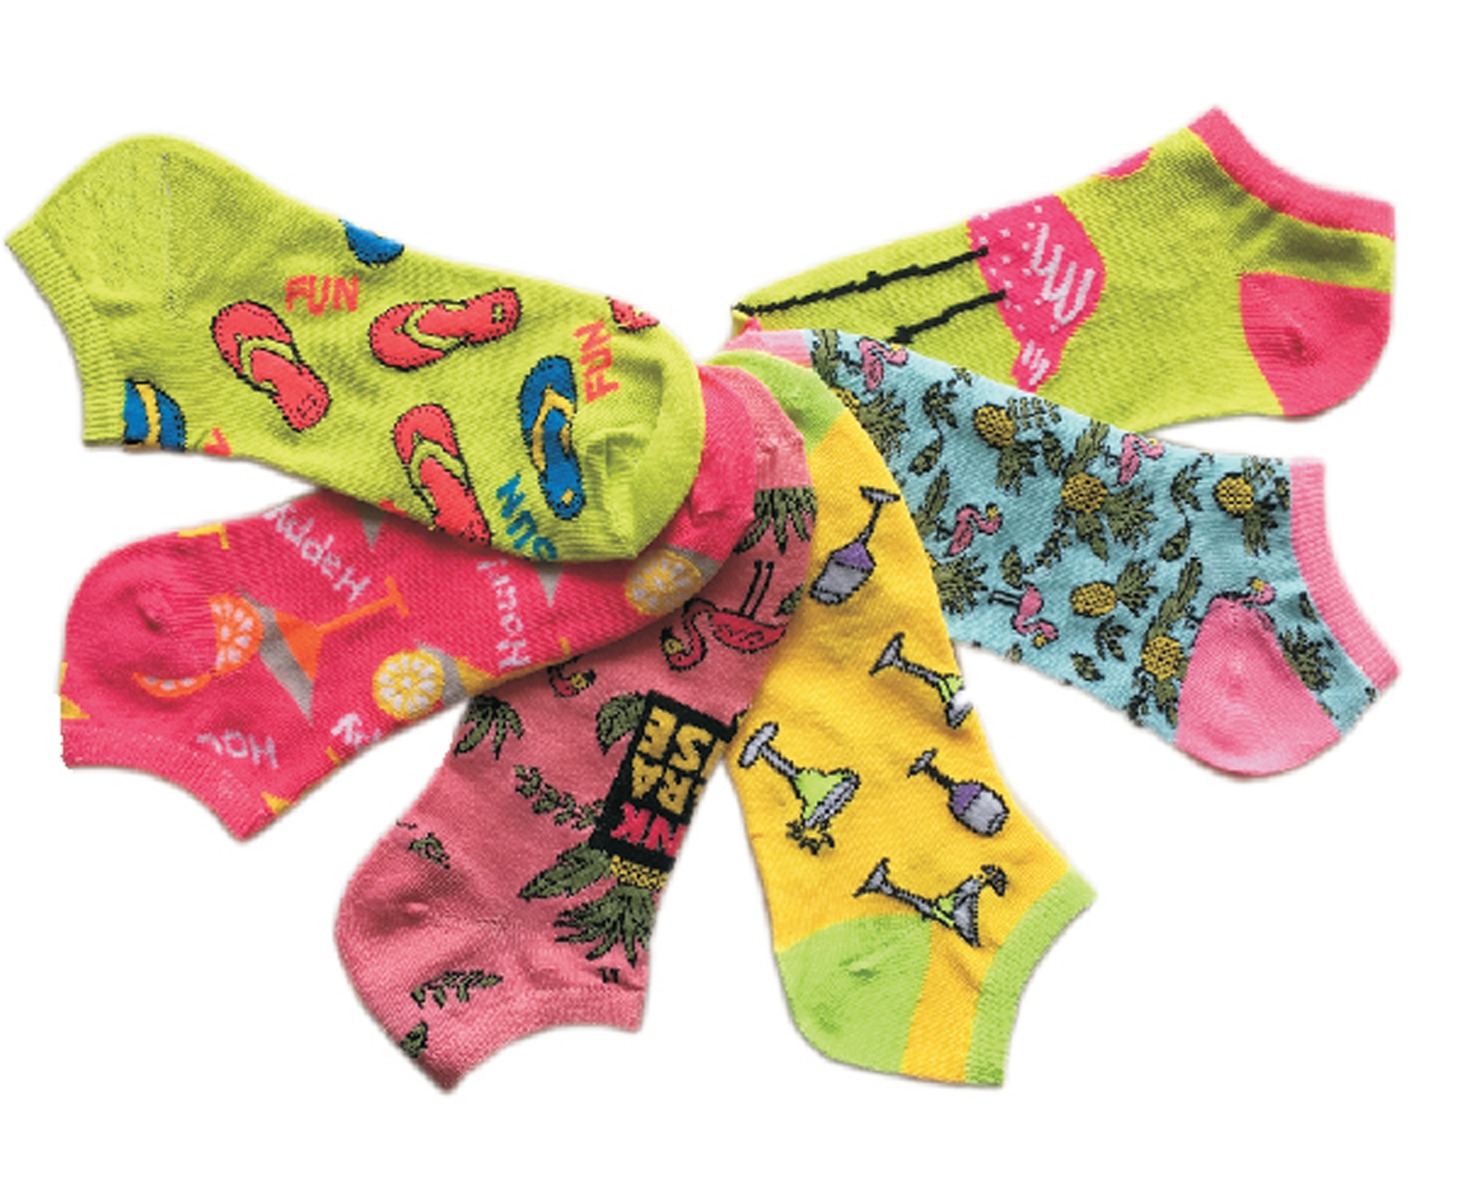 ''Women's Low Cut Novelty Socks - Margarita, FLIP FLOP, & Pineapple Print - Size 9-11 - 6-Pair Packs''